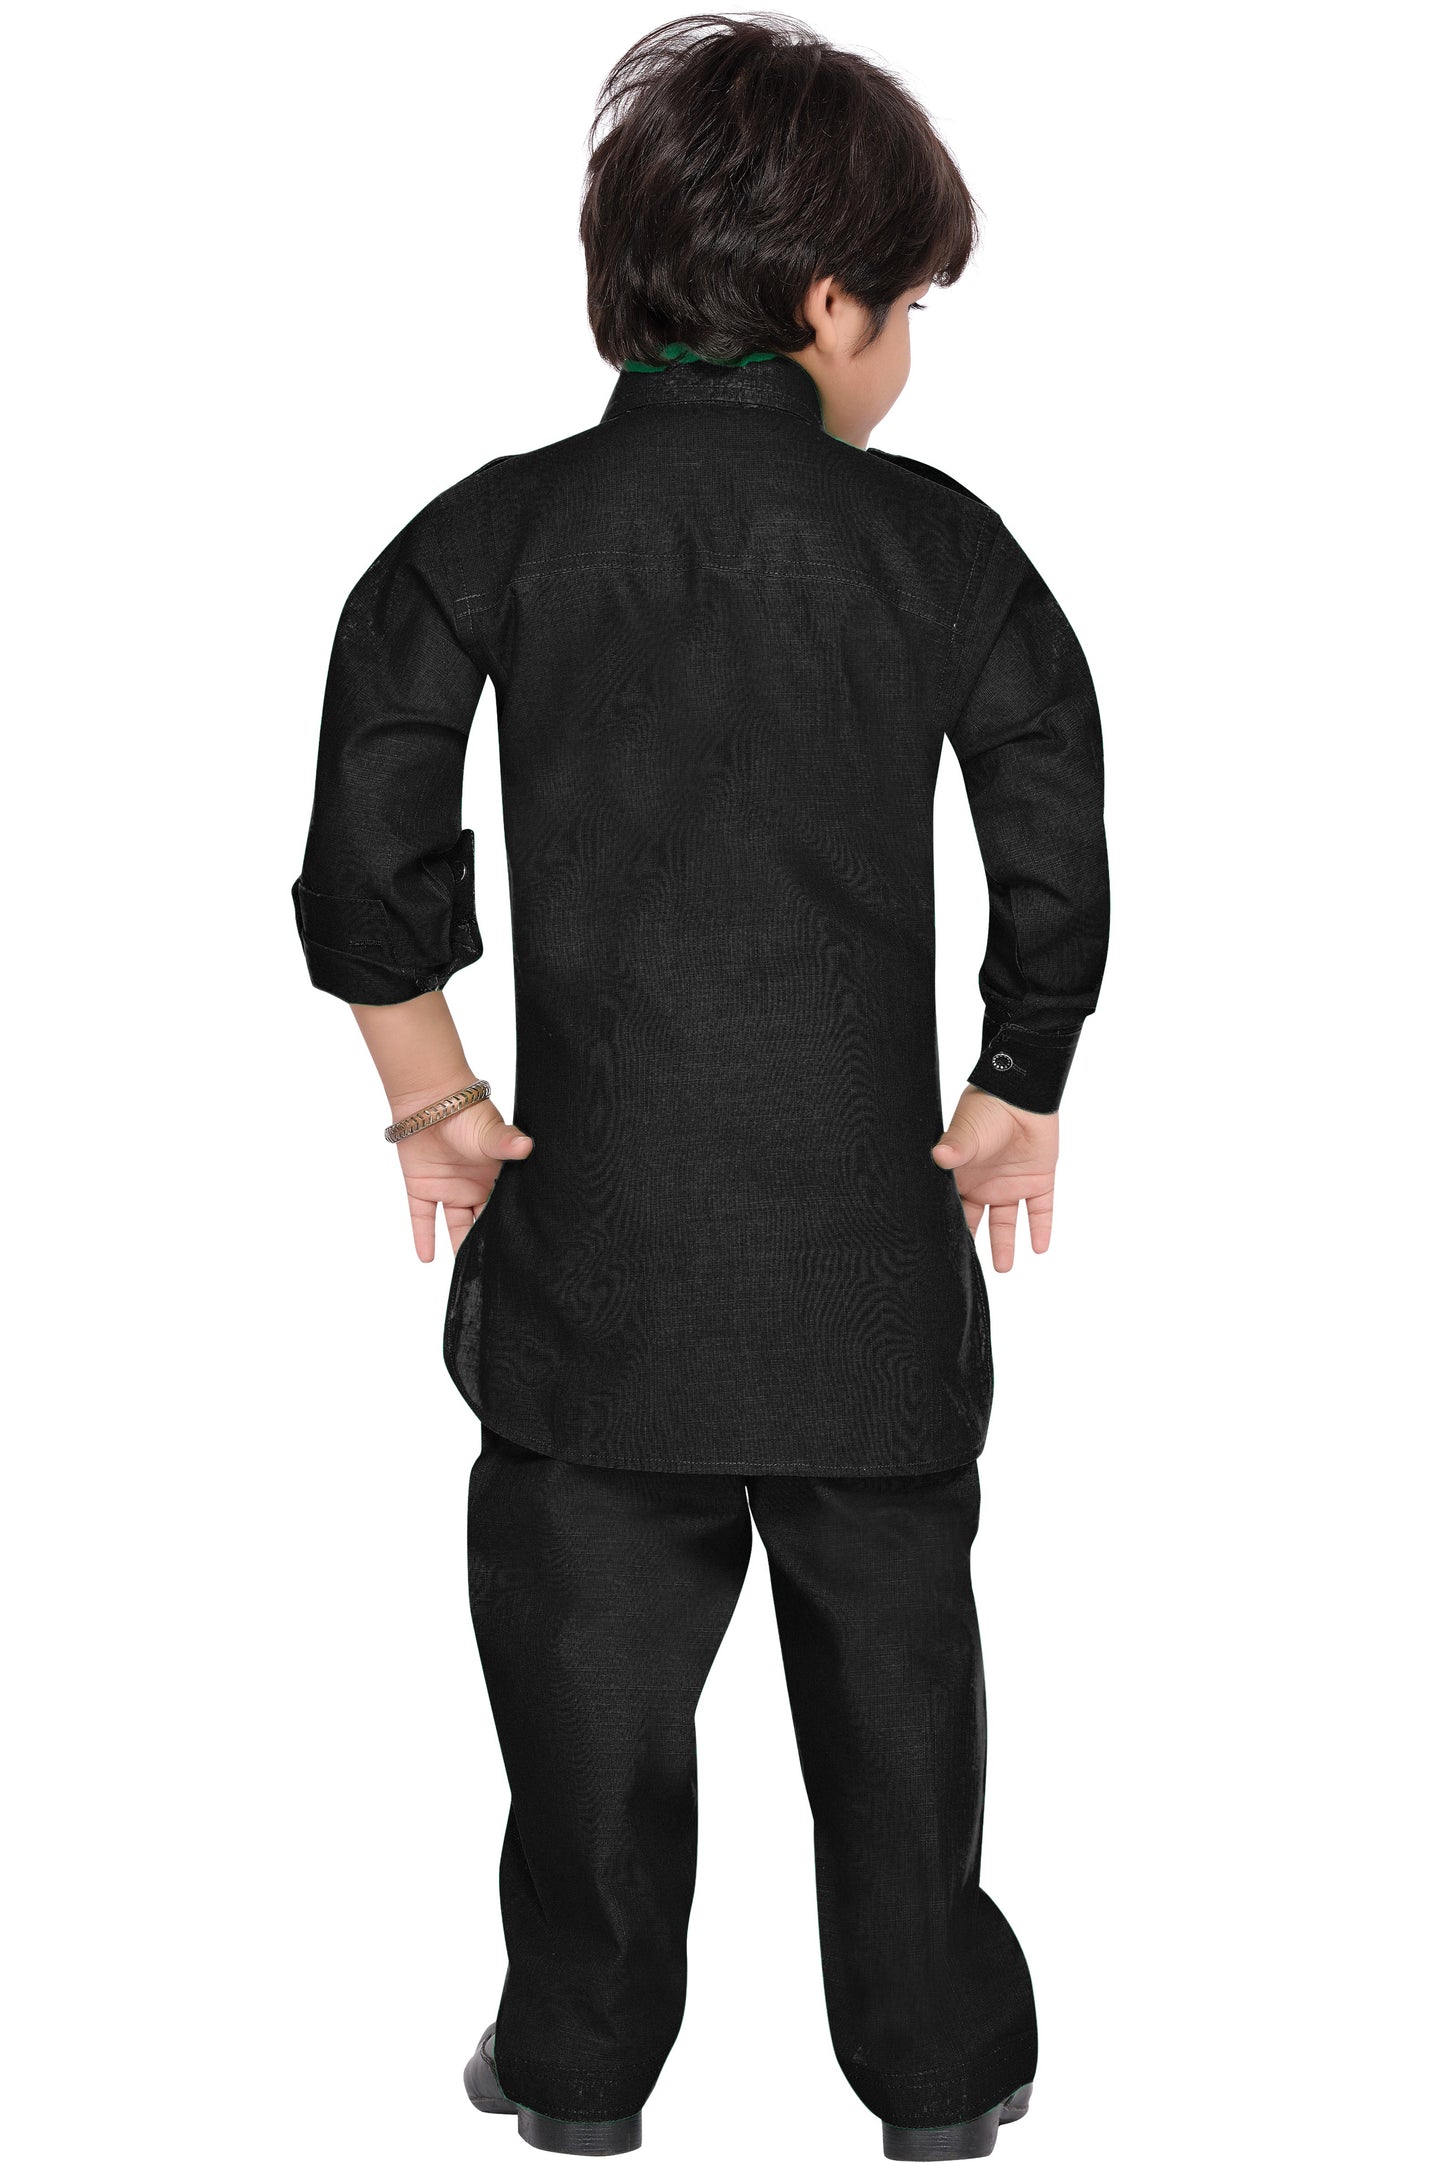 Boys Black Cotton Solid Pathani Suit